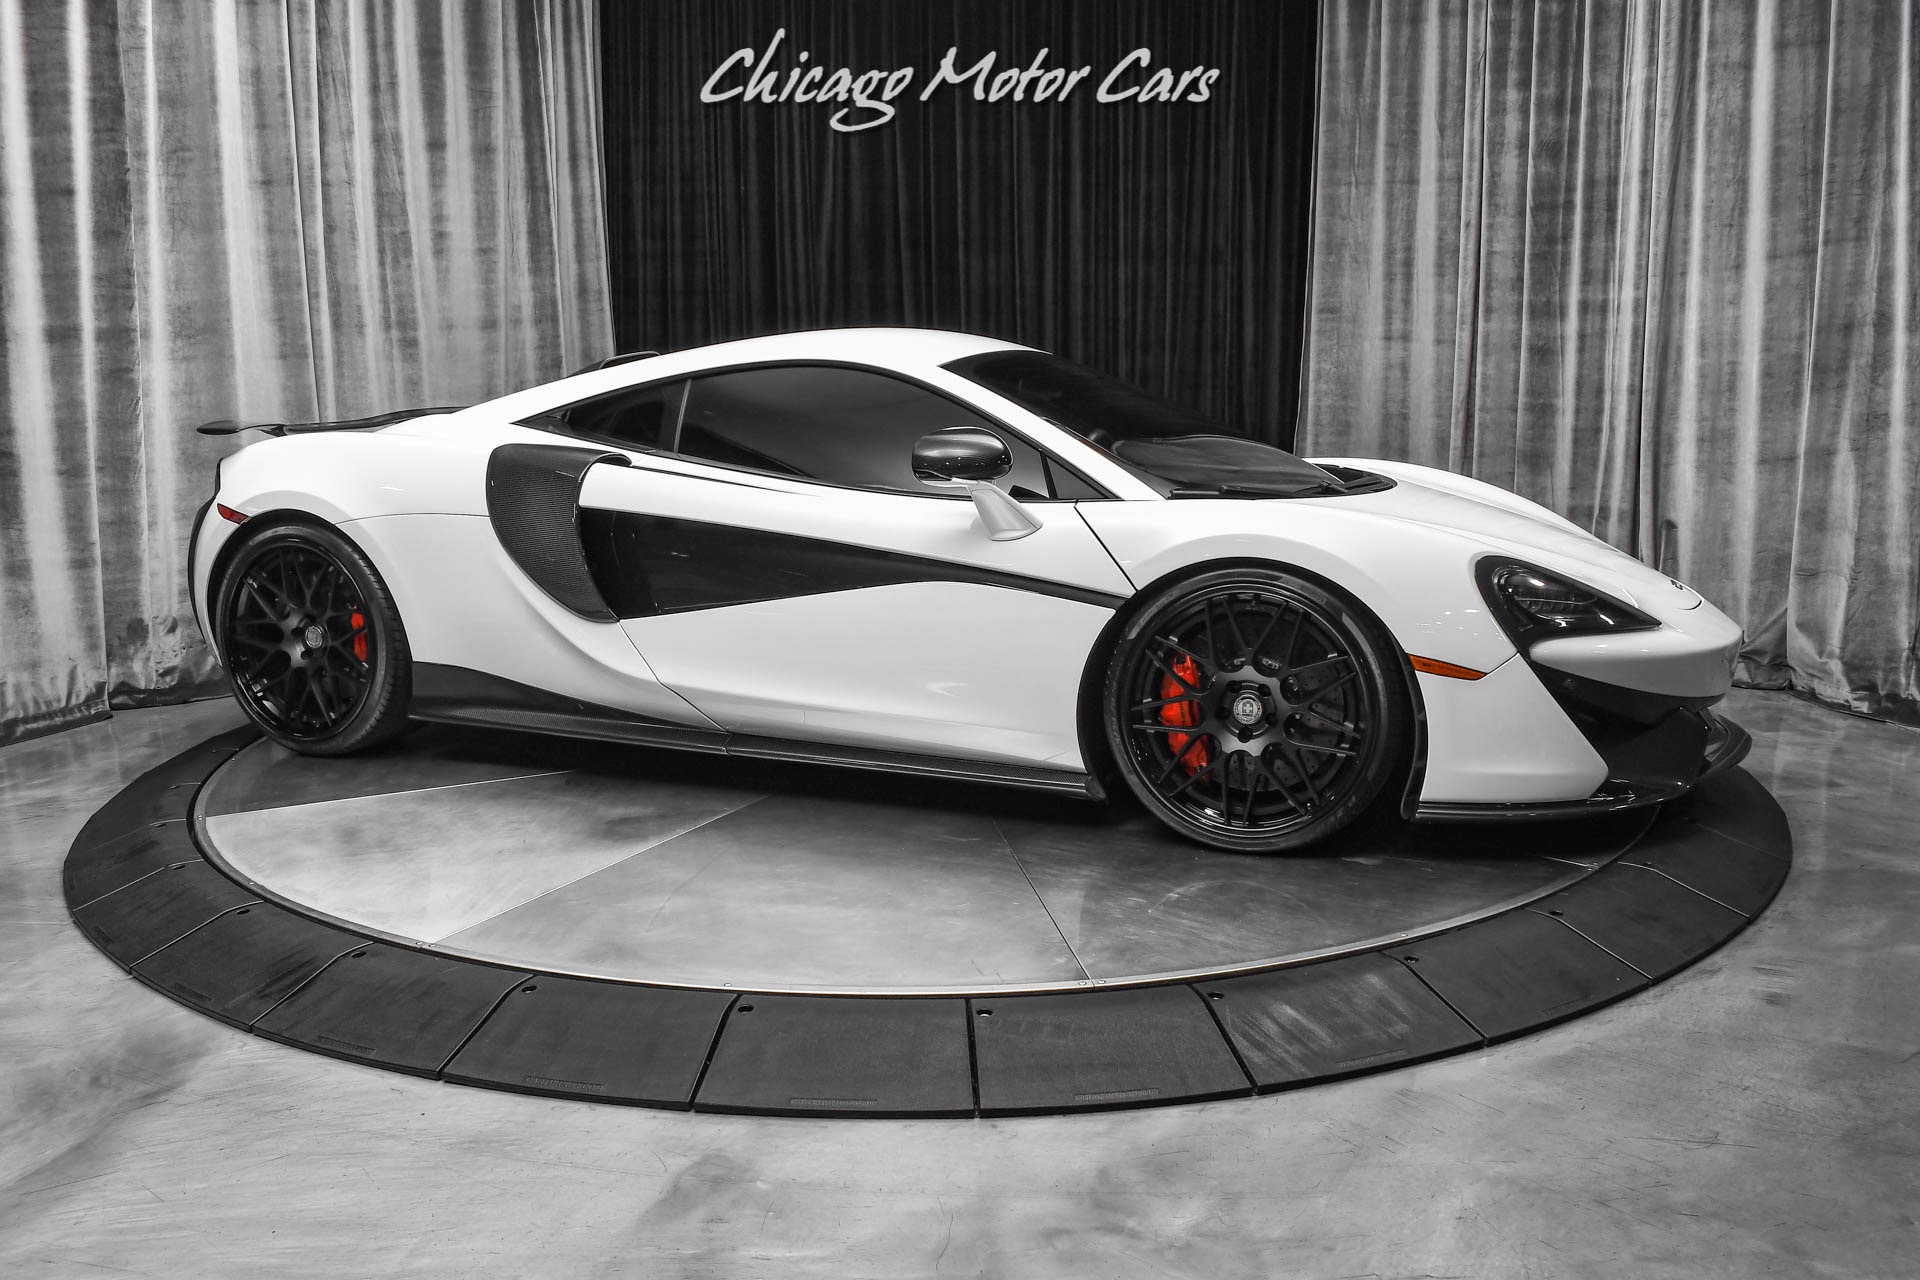 Used-2016-McLaren-570S-Coupe-Novitec-Carbon-Body-Kit-HRE-Performance-Wheels-7K-Miles